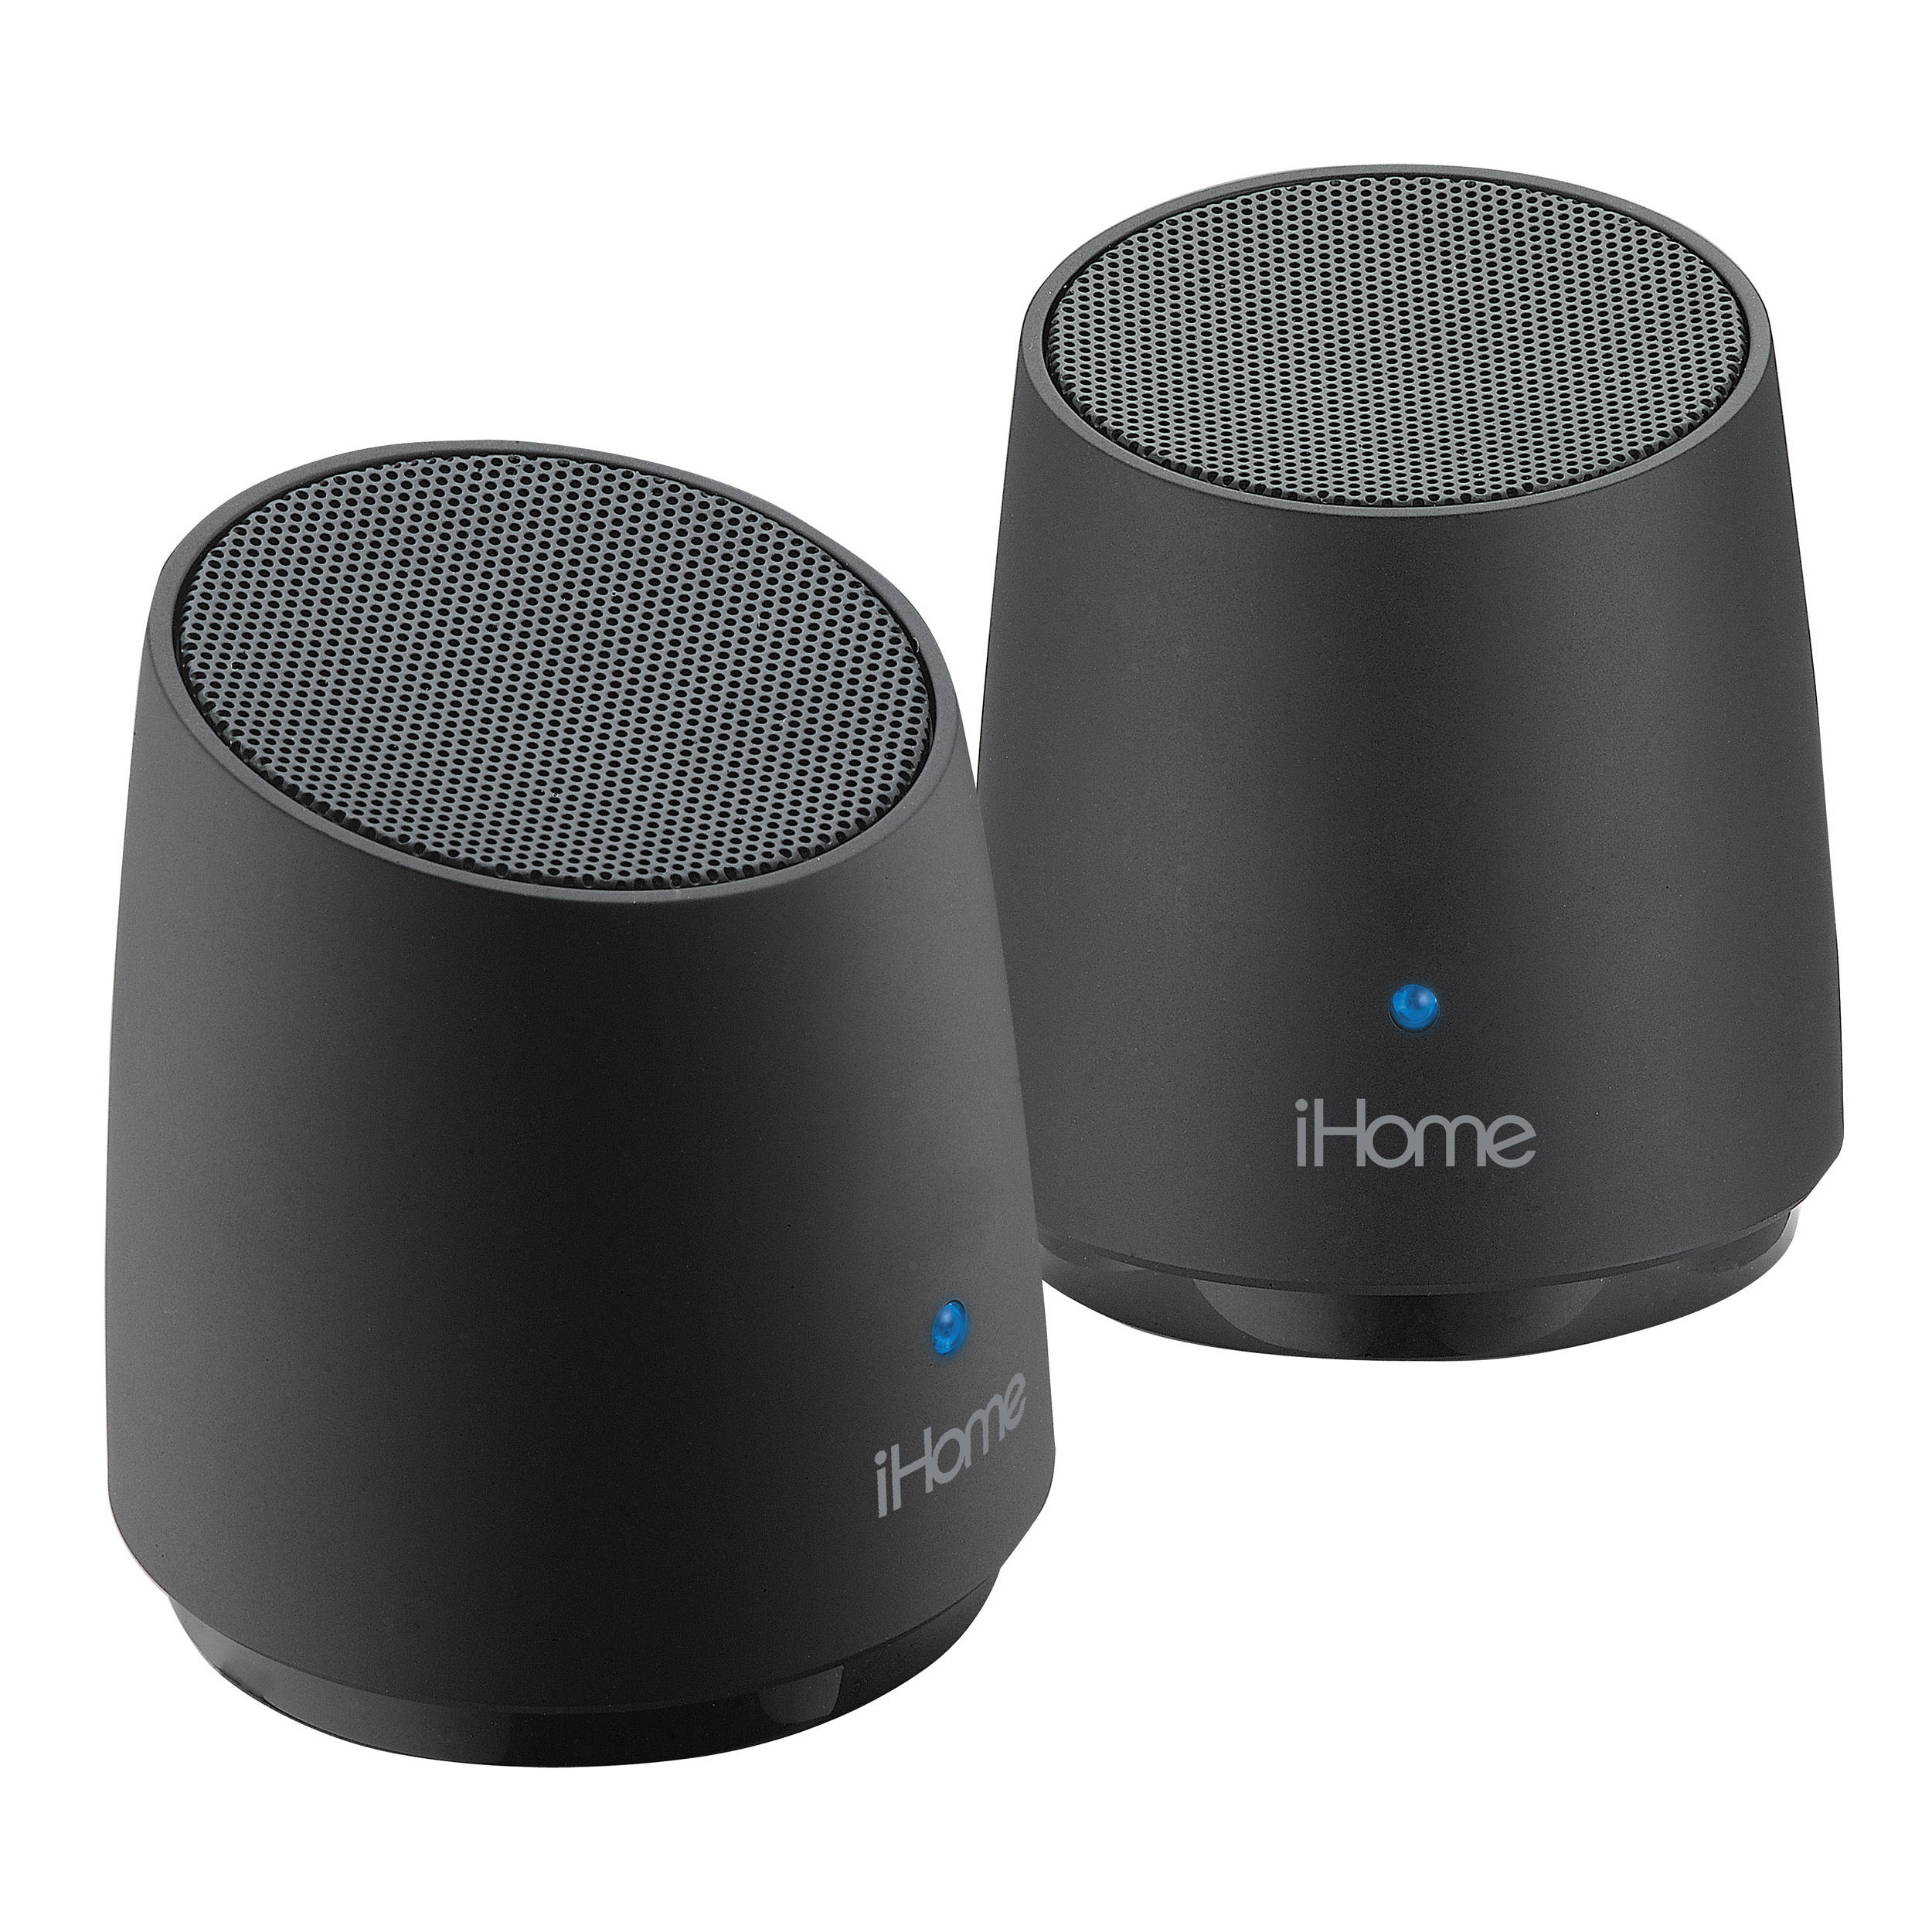 ihome mini speaker pairing